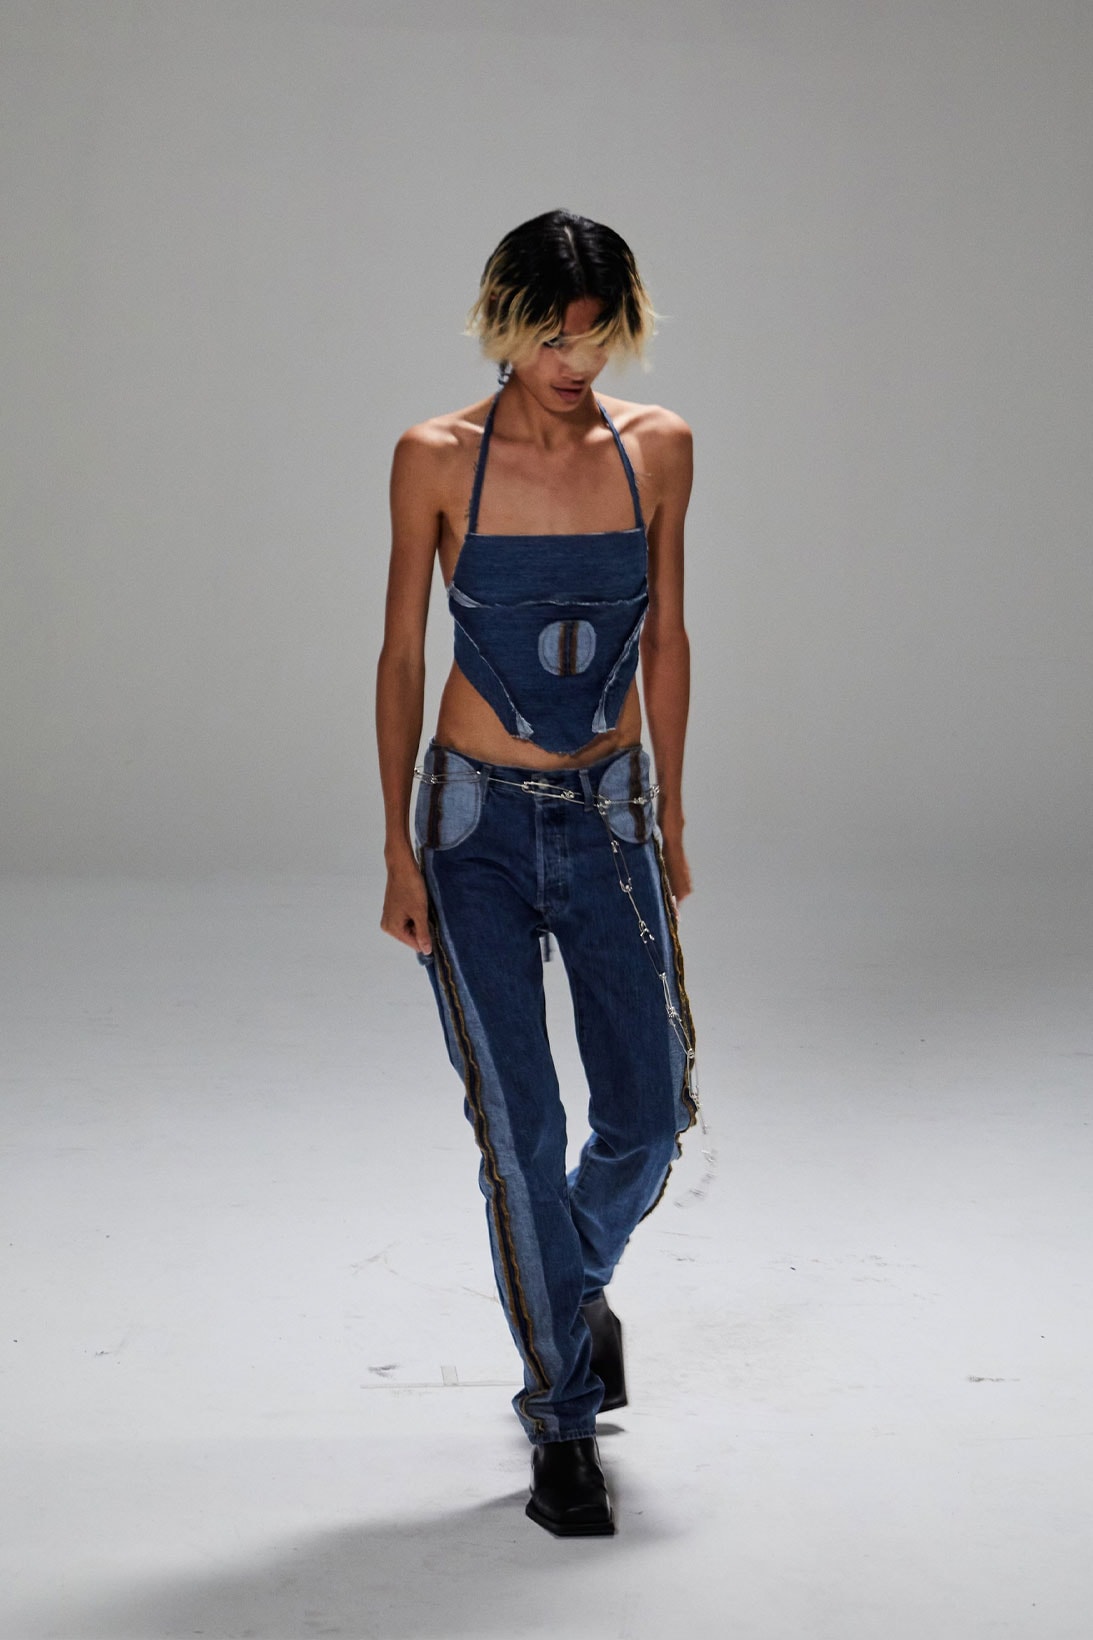 Levi's Sami Miro Vintage Denim Jeans Collaboration Sustainability Release Info